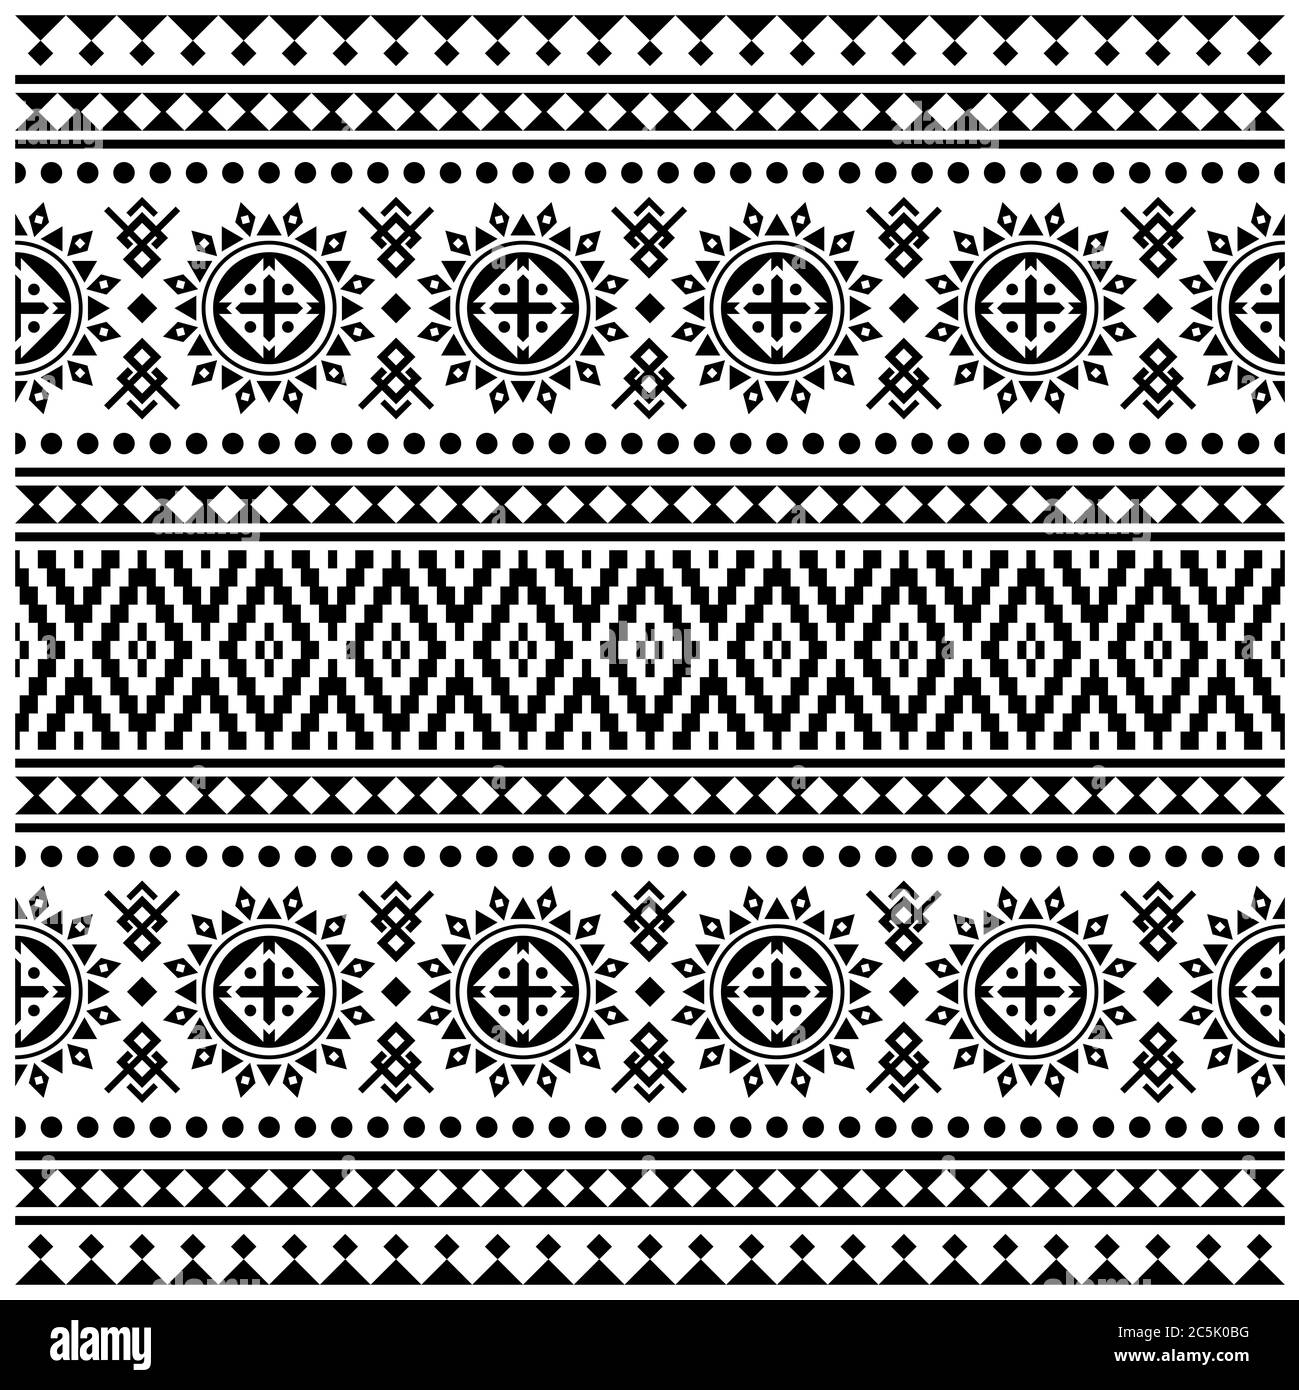 Traditionelle Tribal Muster Design Vektor in schwarz weiß Farbe Stockfoto